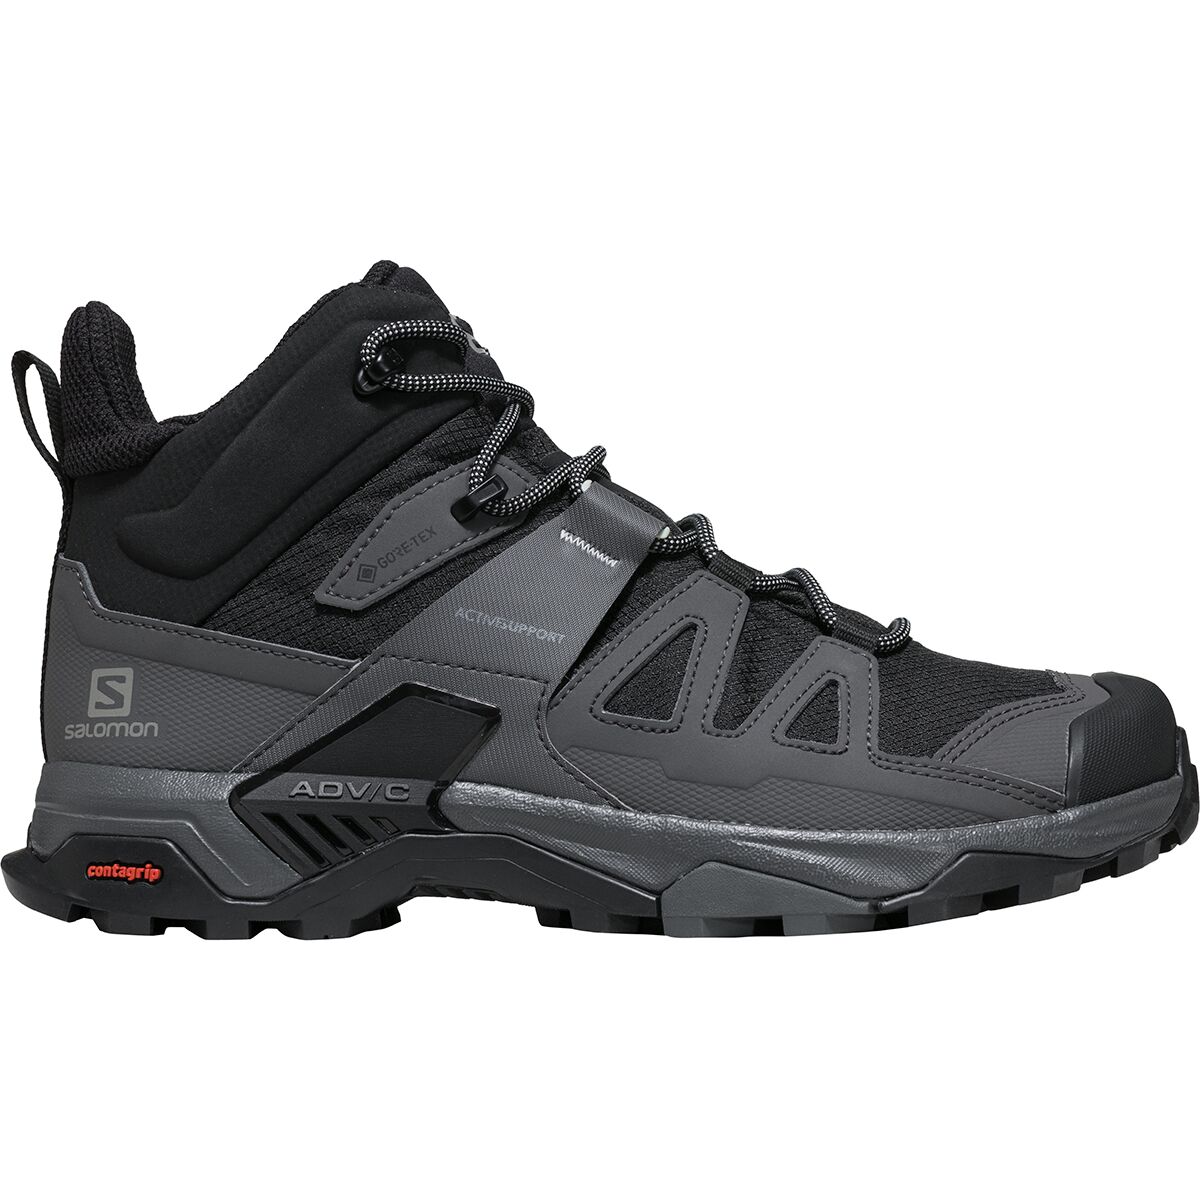 Salomon X Ultra 4 Mid GTX Wide Hiking Shoe - Men's